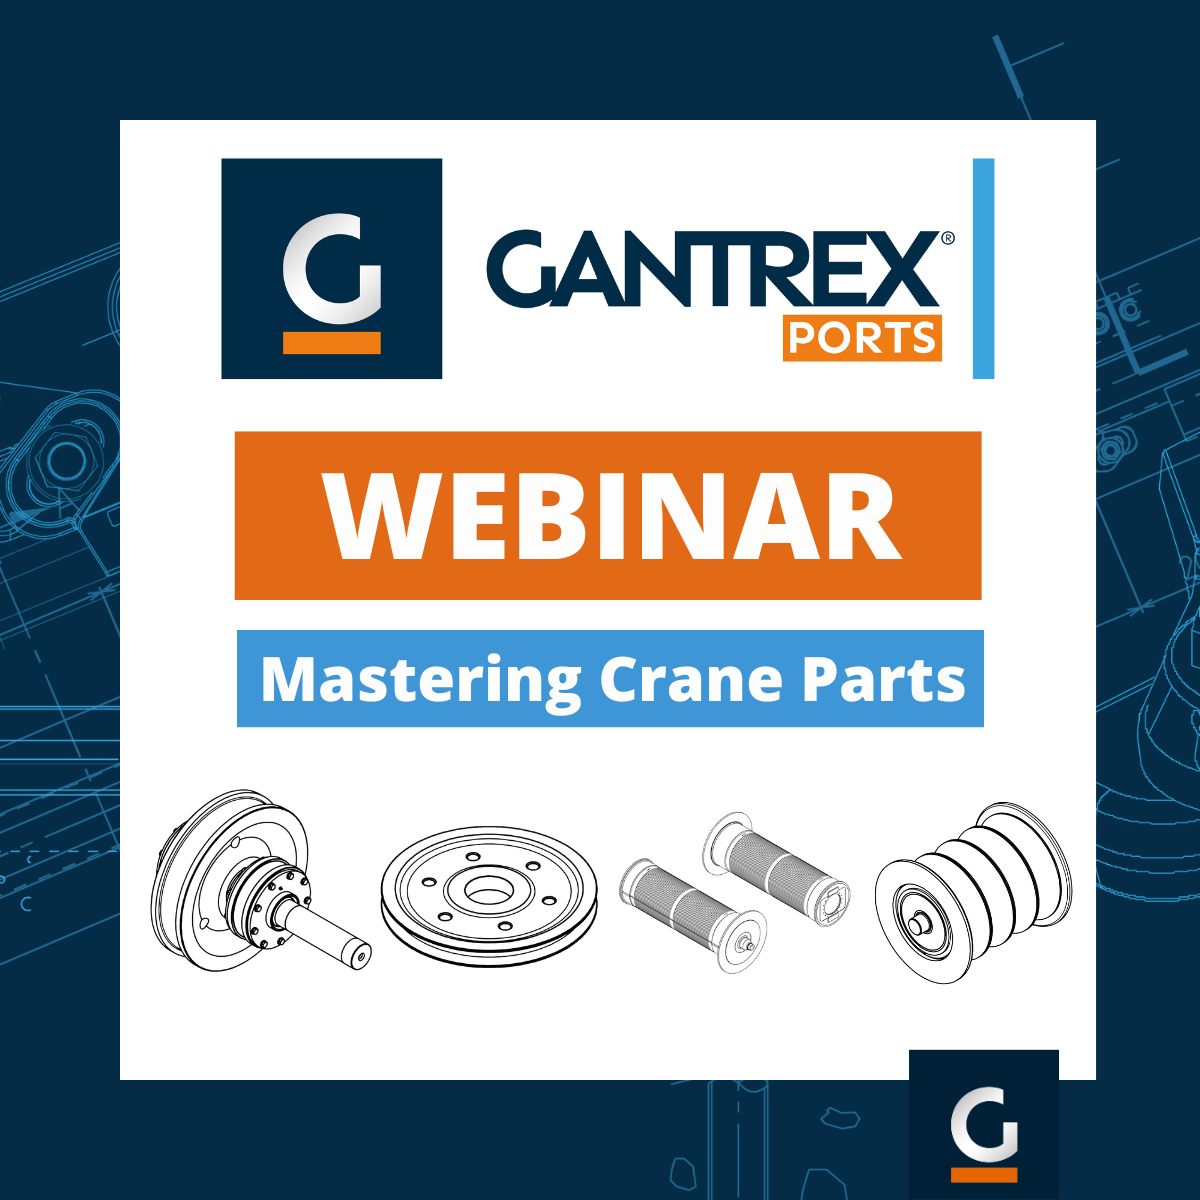 Gantrex Port Crane Solutions: Mastering Crane Parts